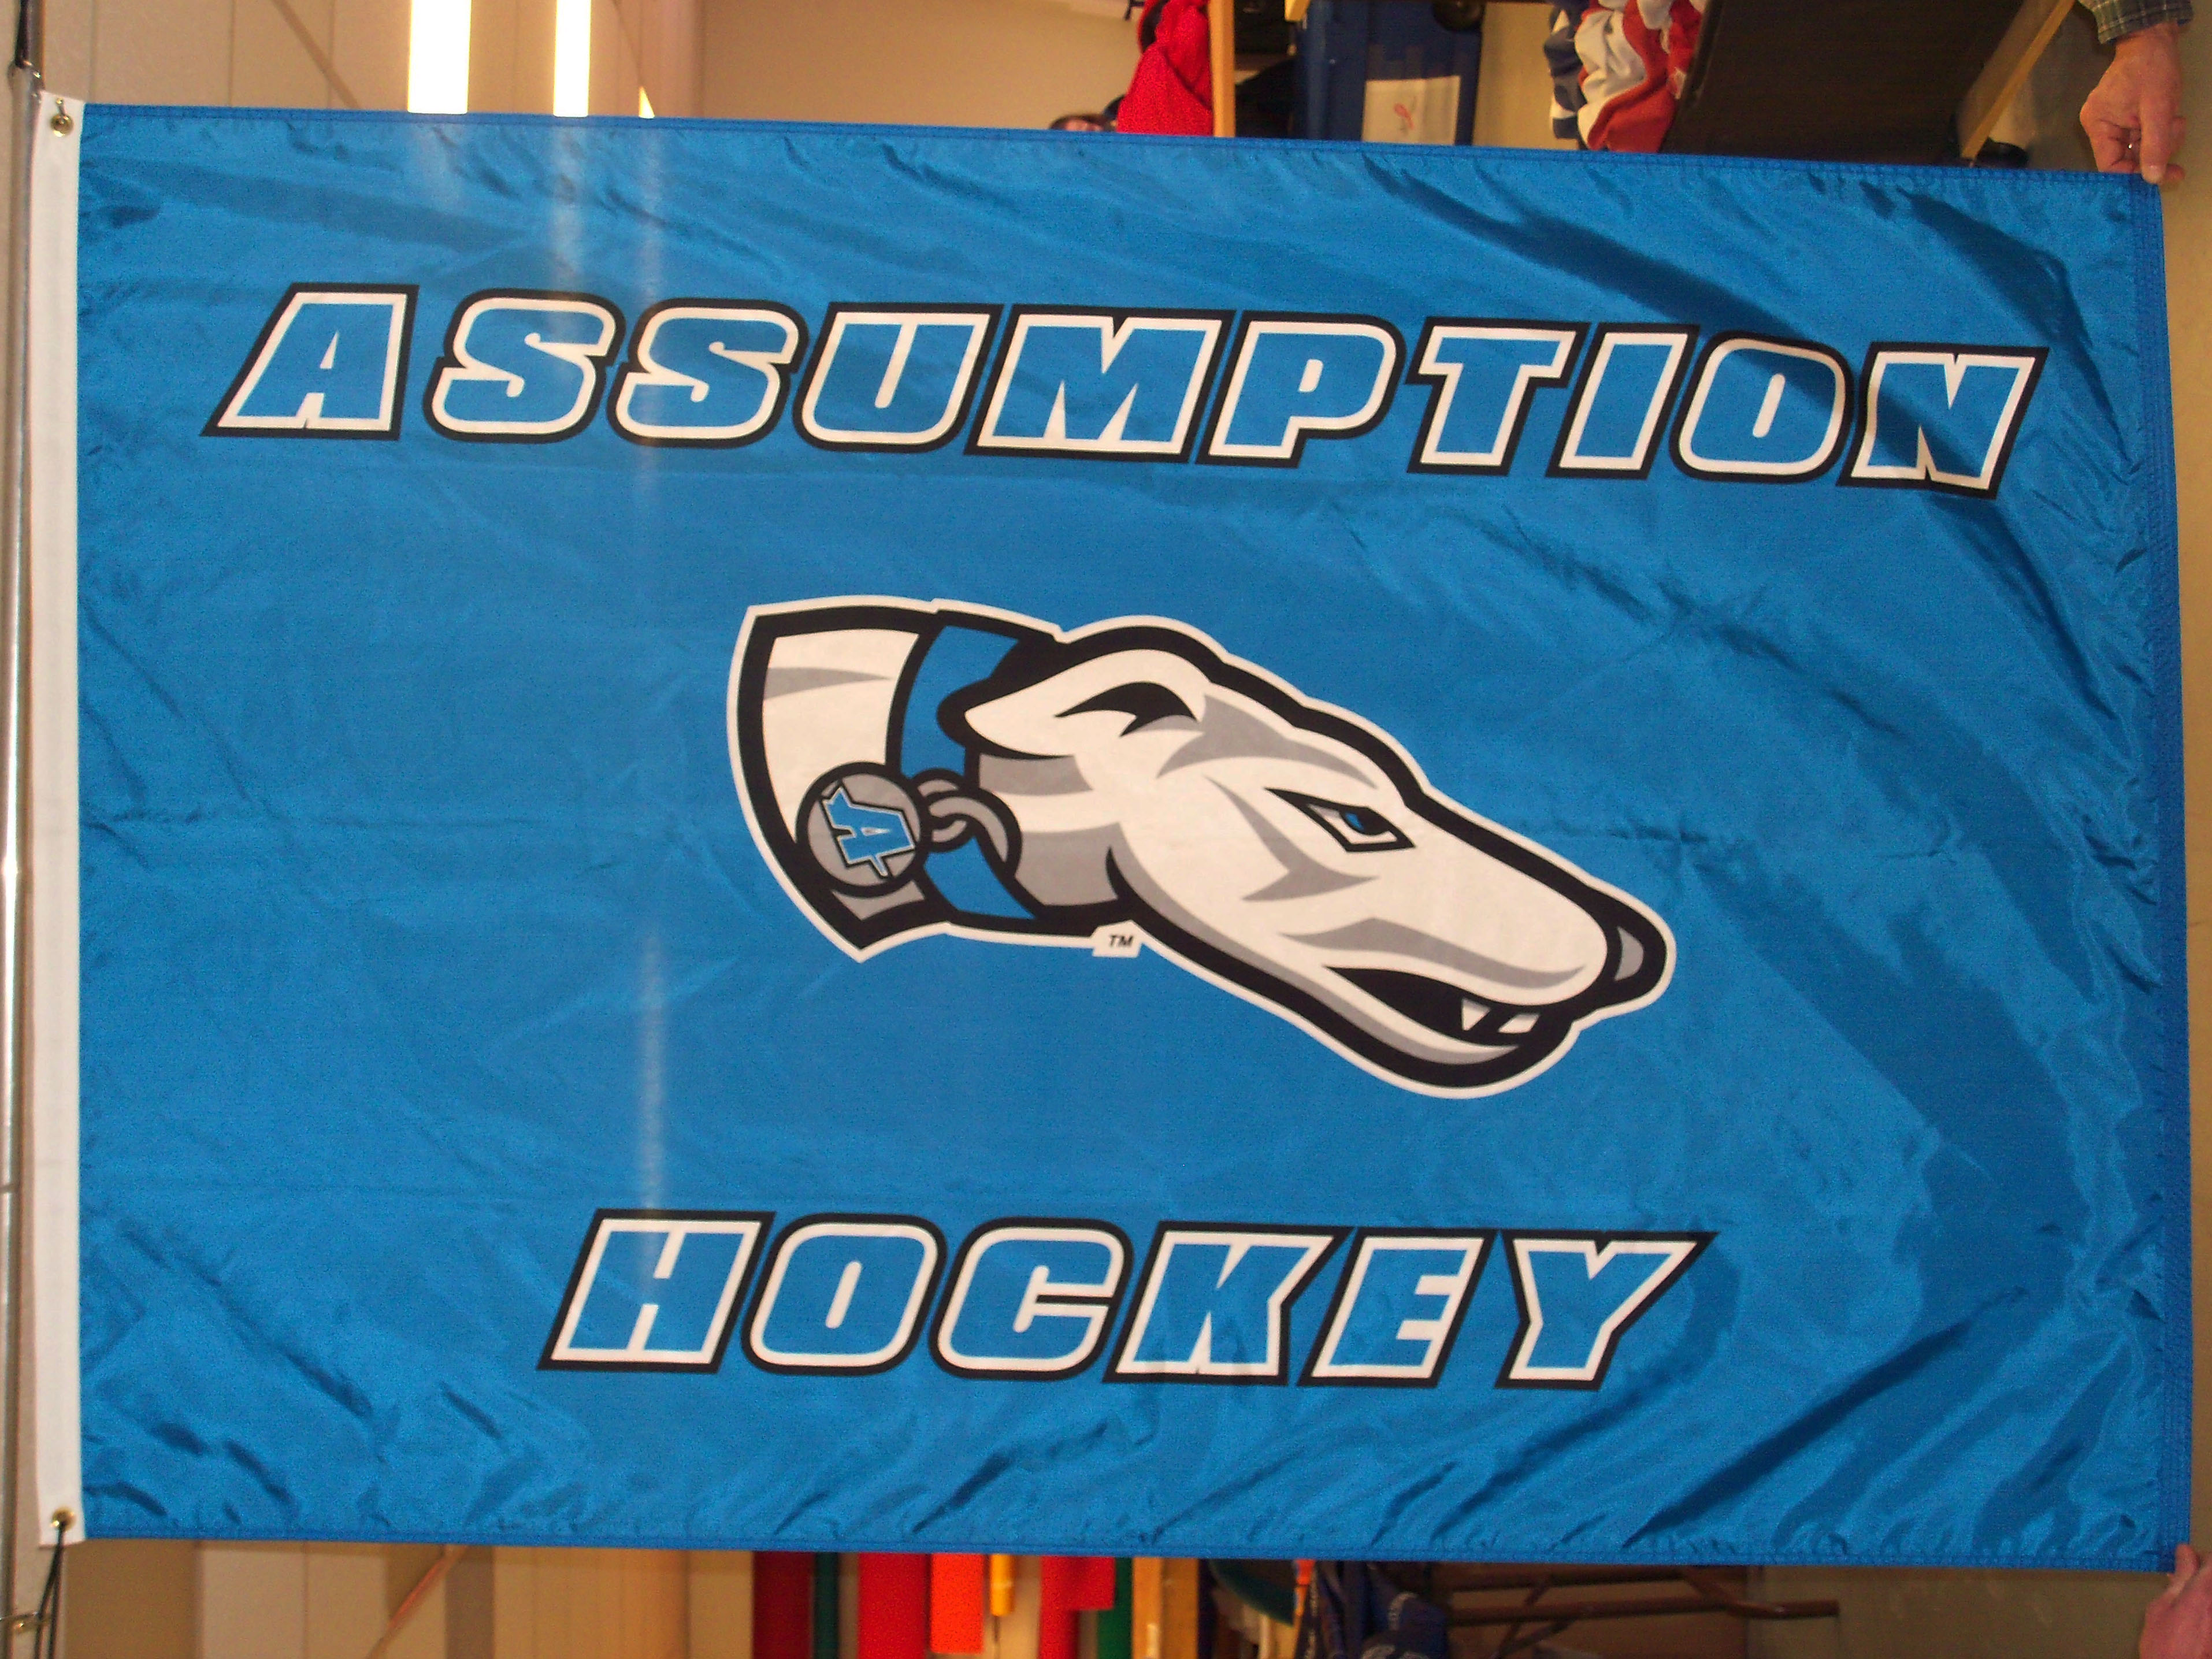 A custom printed flag for Assumption College Hockey.